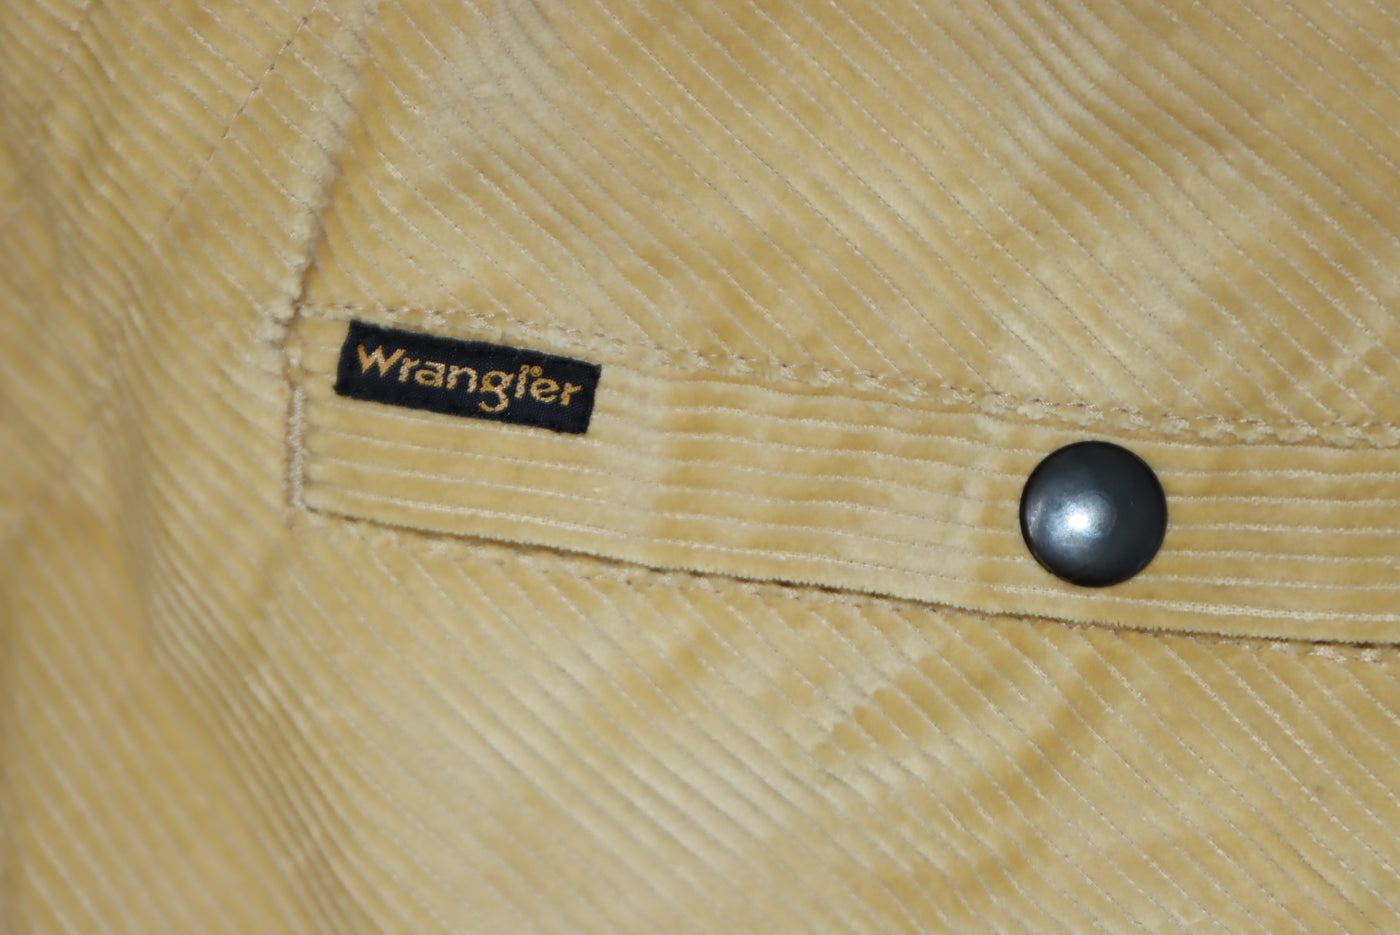 Wrangler Blue Bell giacca in velluto beige taglia L nuovo deadstock